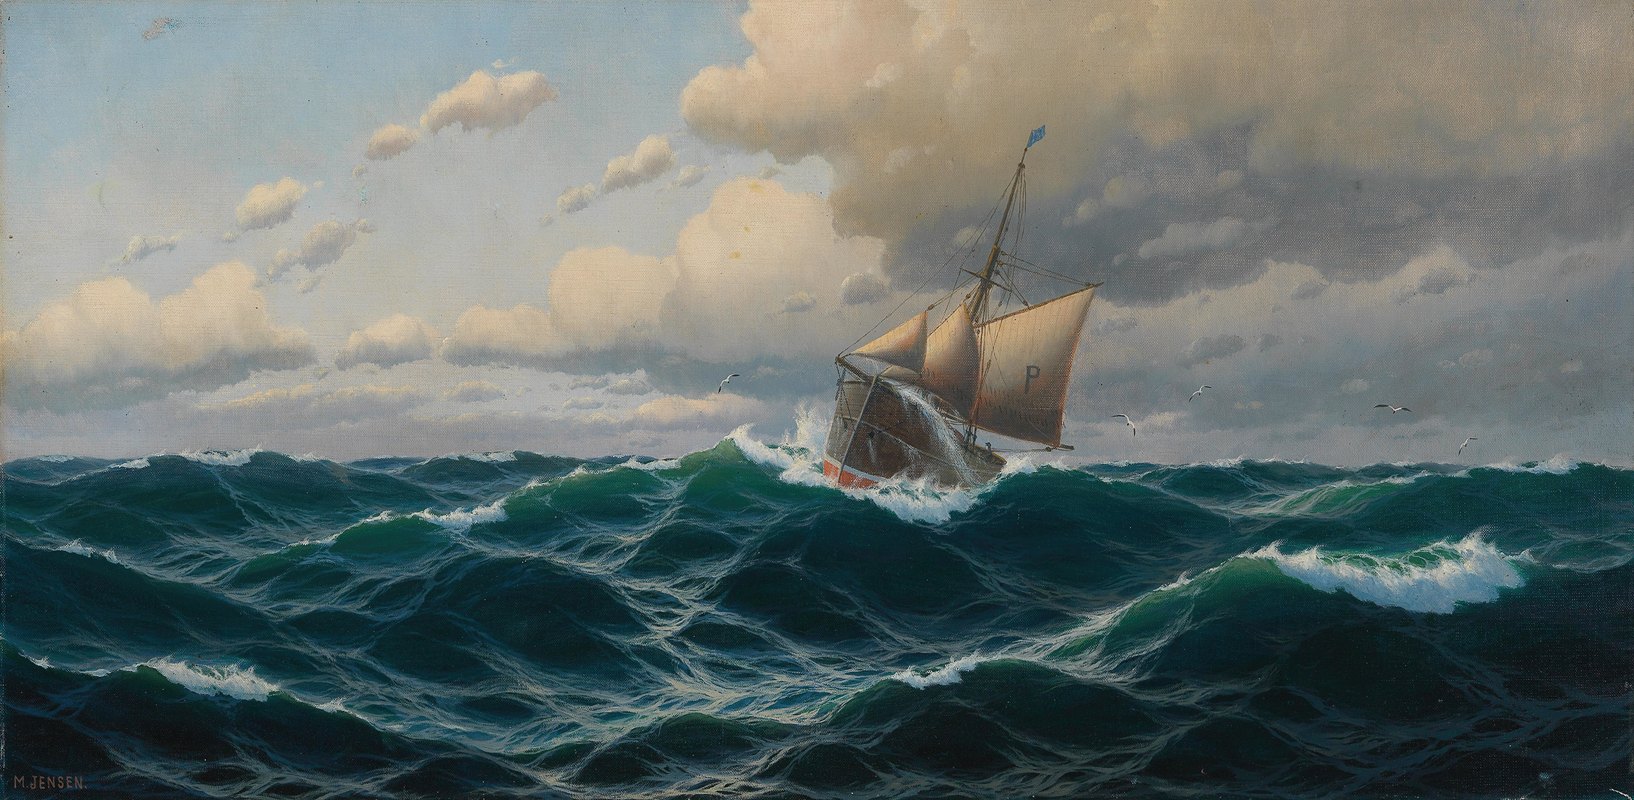 公海上的船`Schiff auf Hoher See by Max Jensen